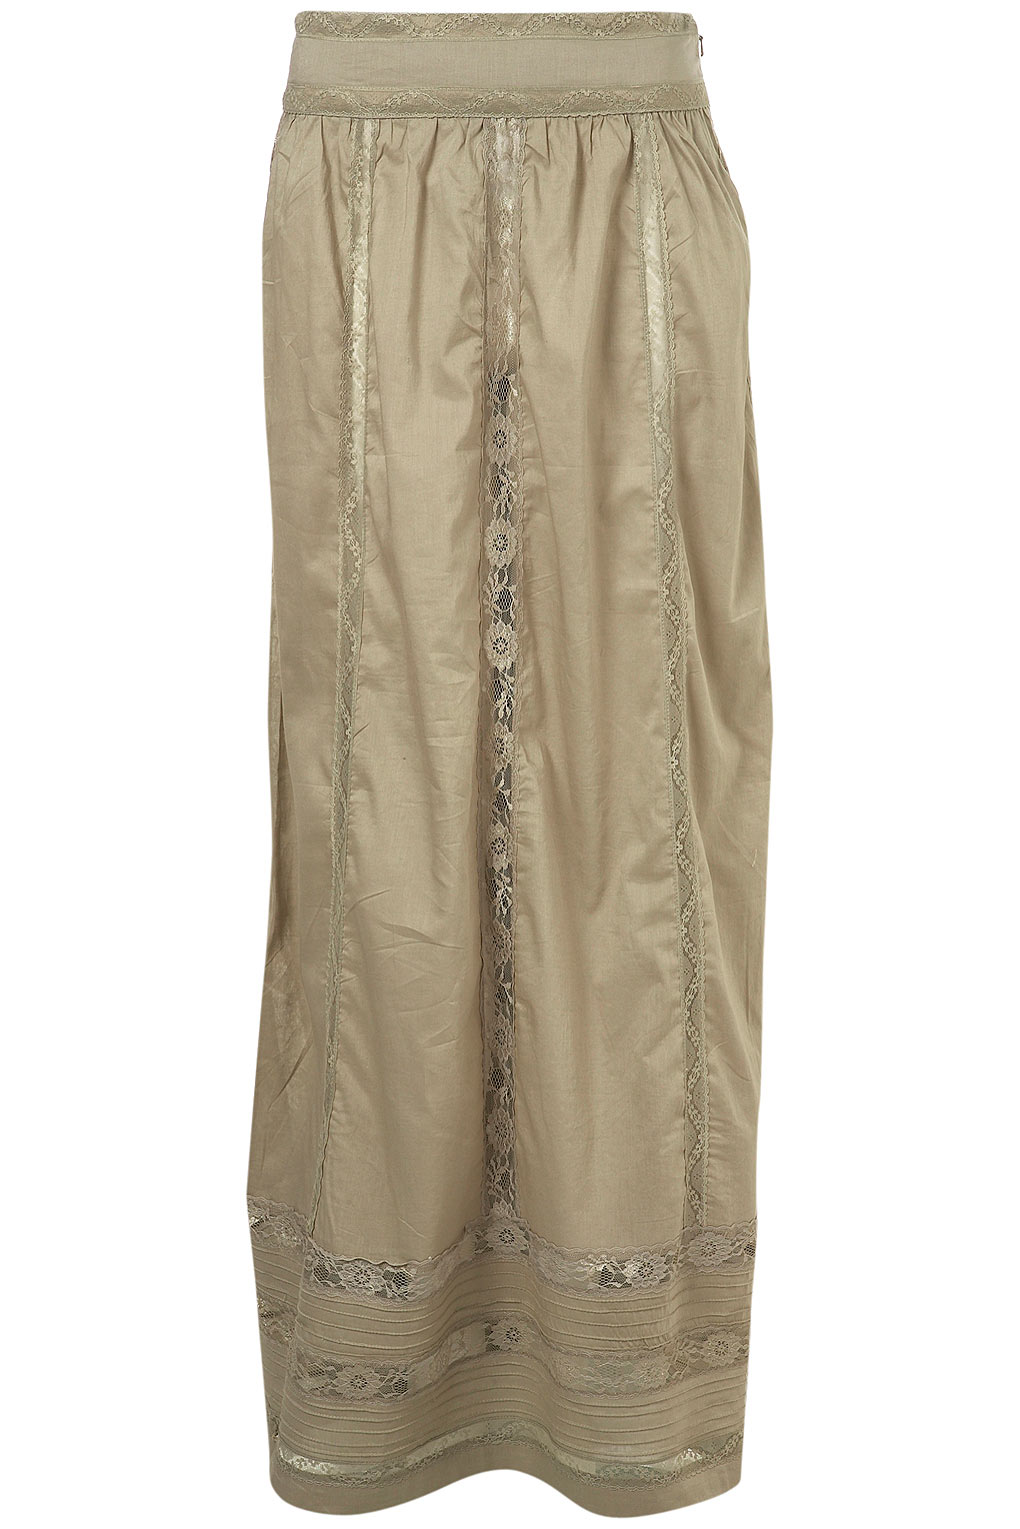 Topshop maxi long skirt Grey Lace panel | Toppingyou Blog